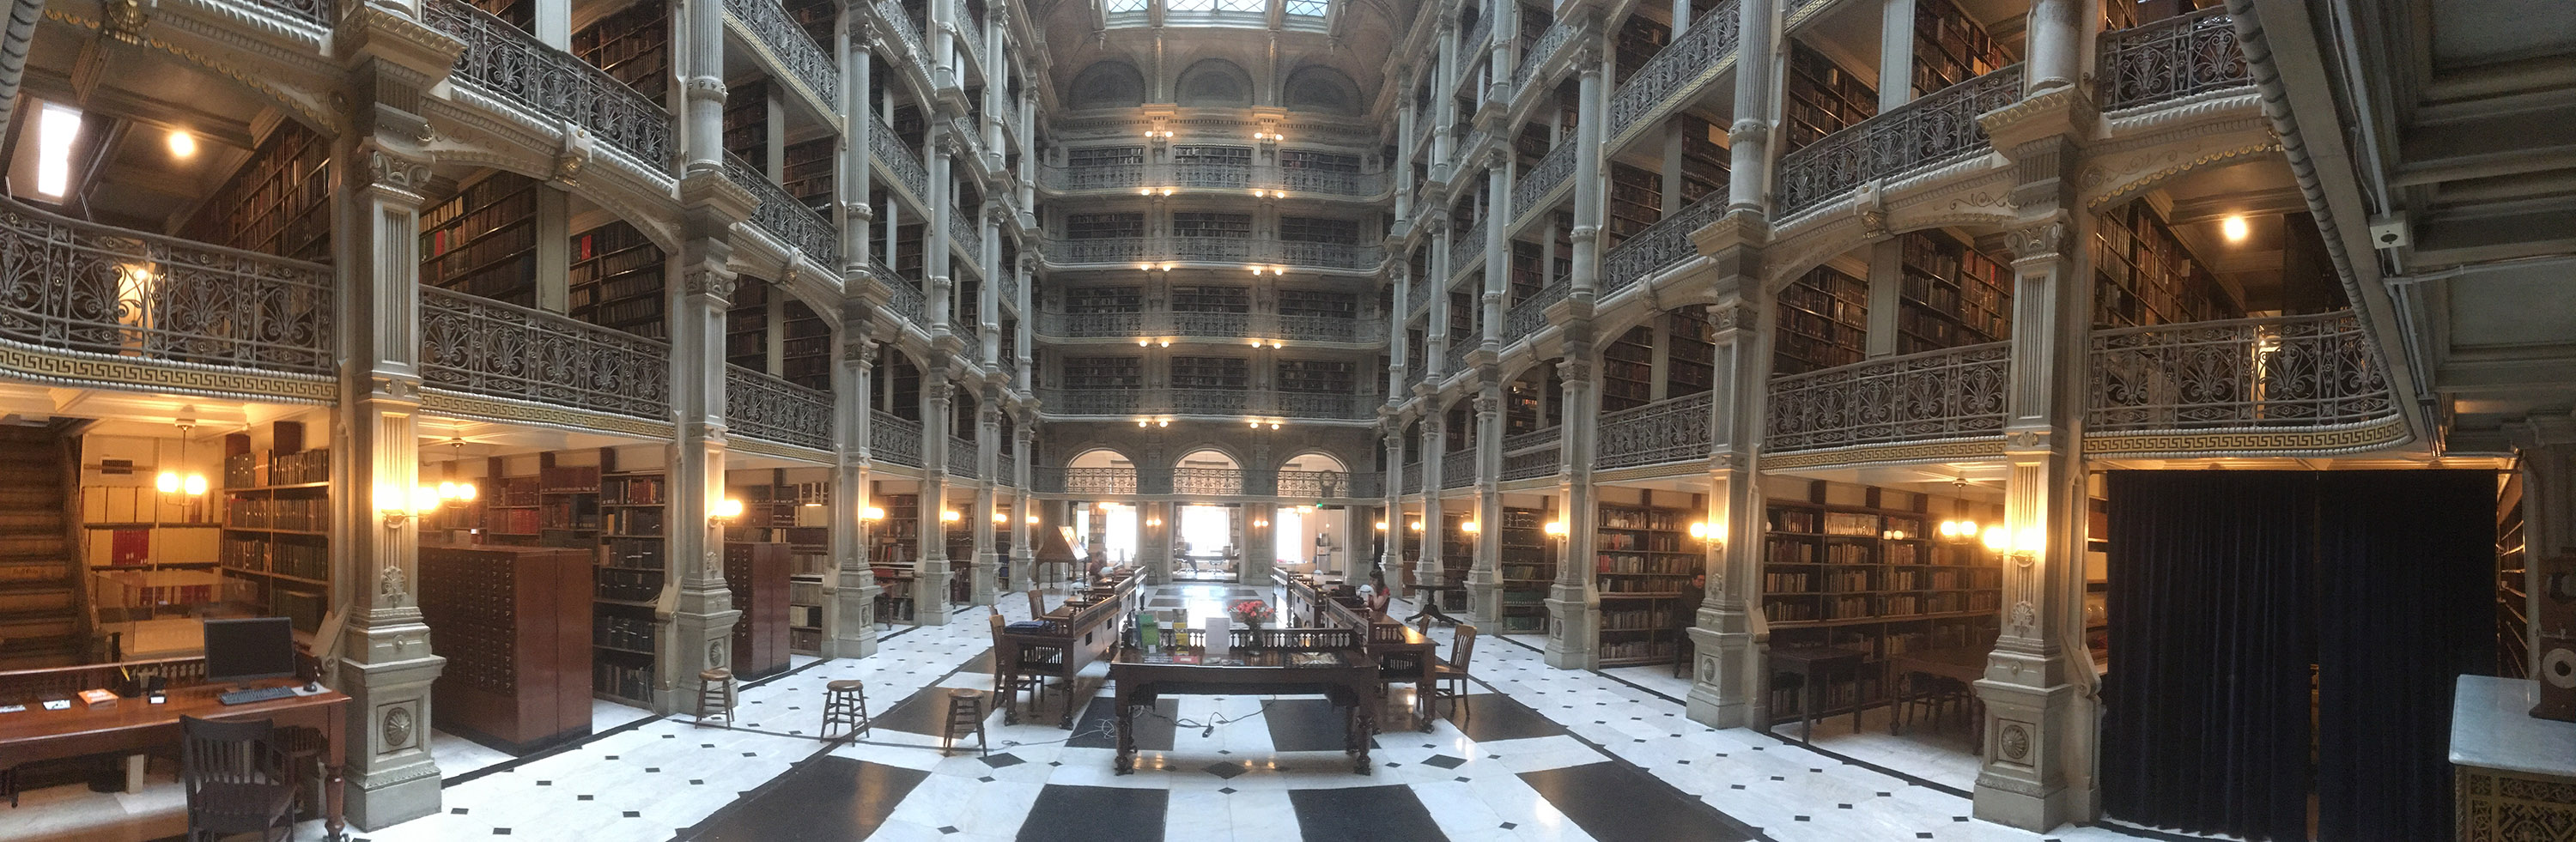 The breathtaking Peabody Library